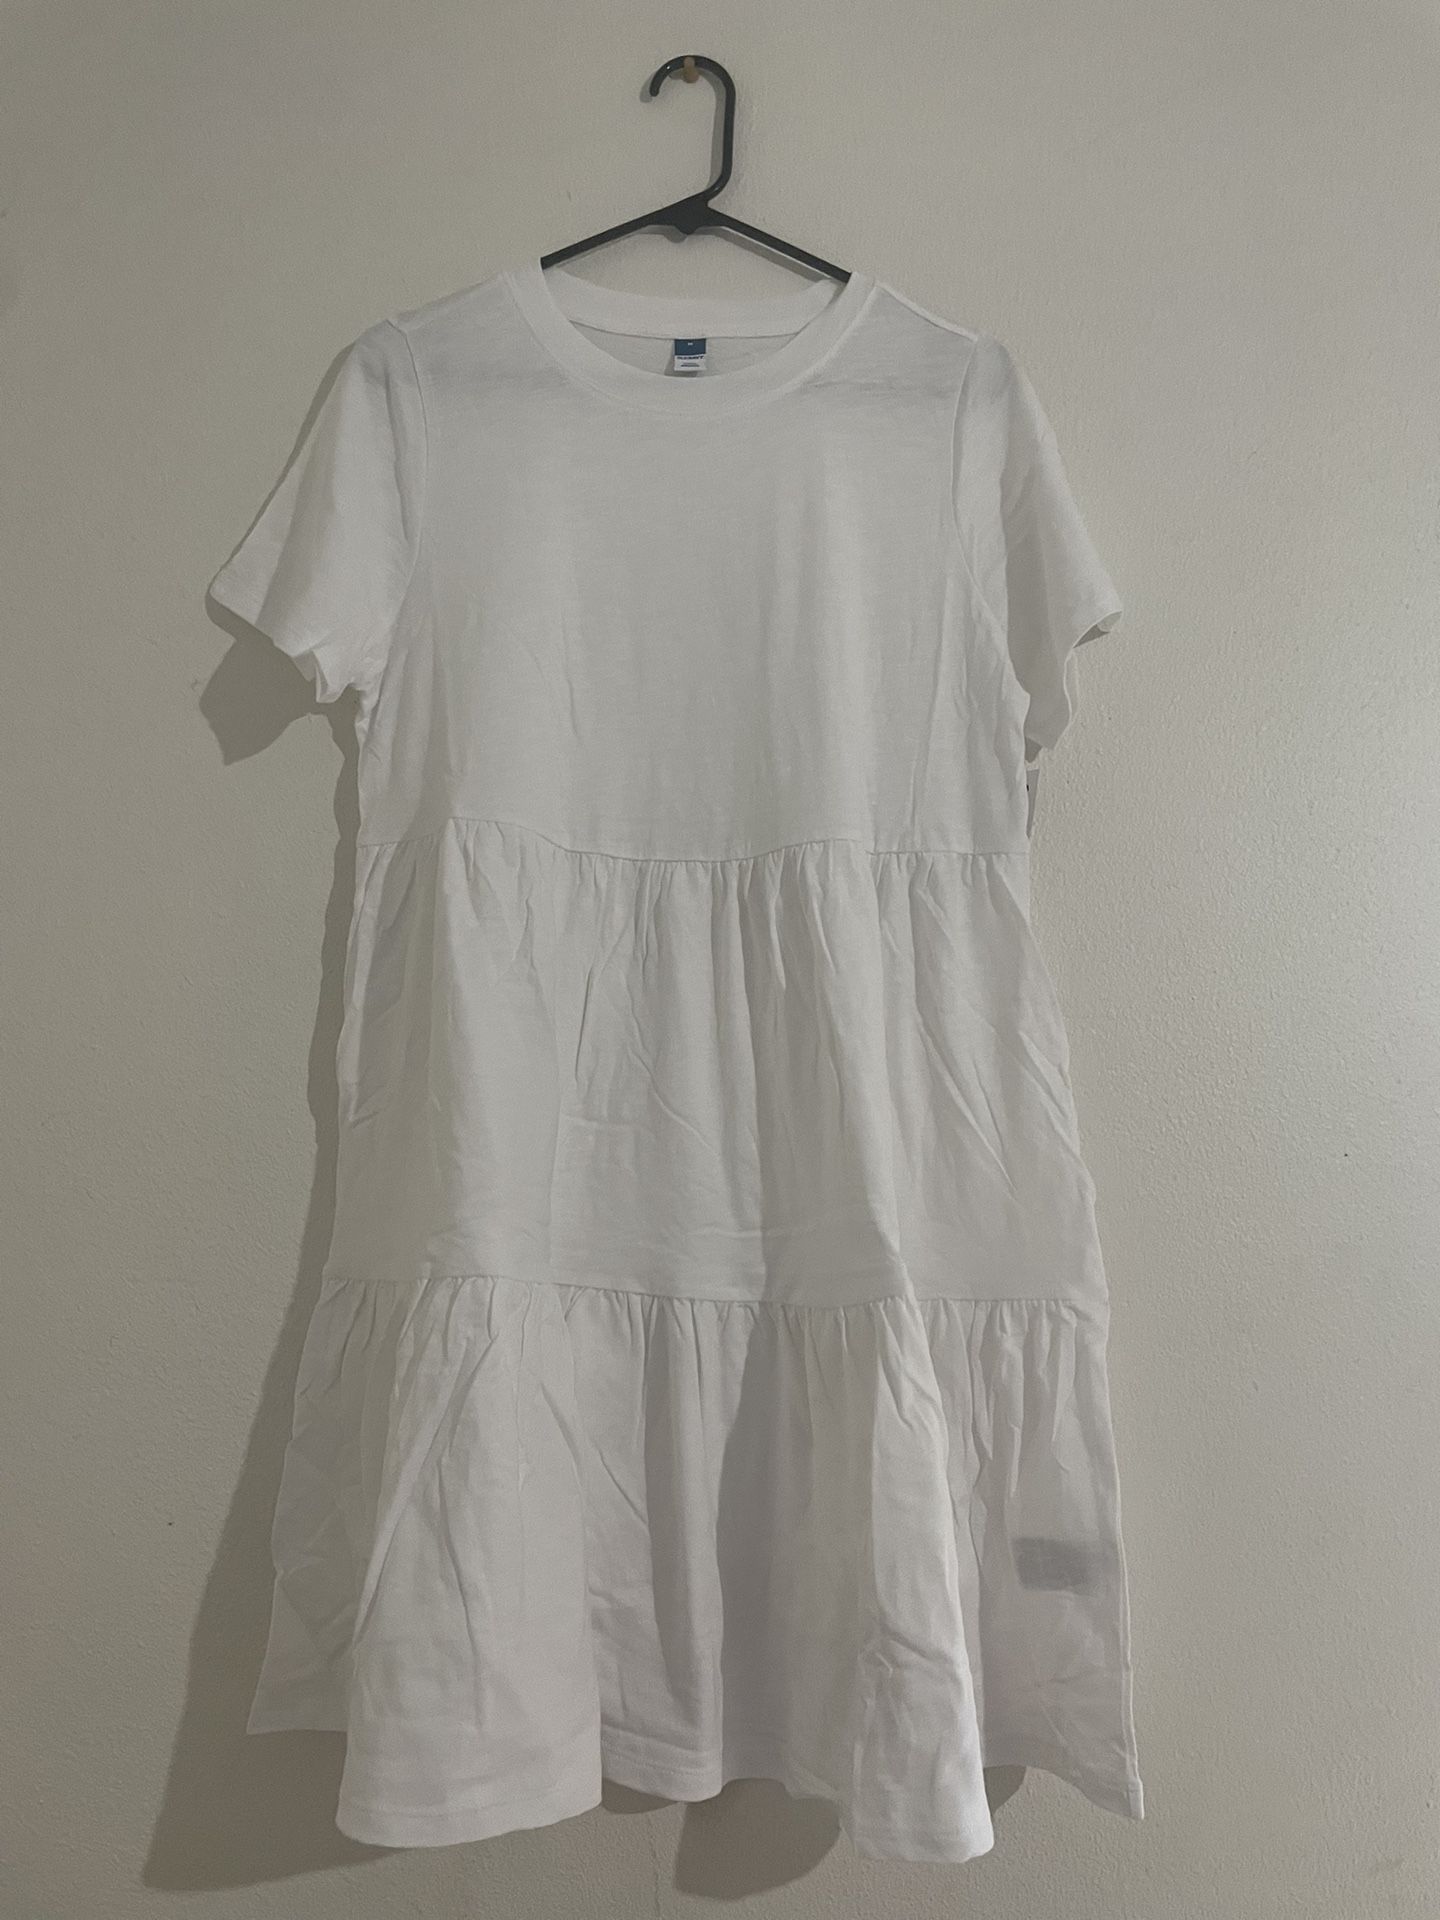 Old Navy White Short Sleeve Dress